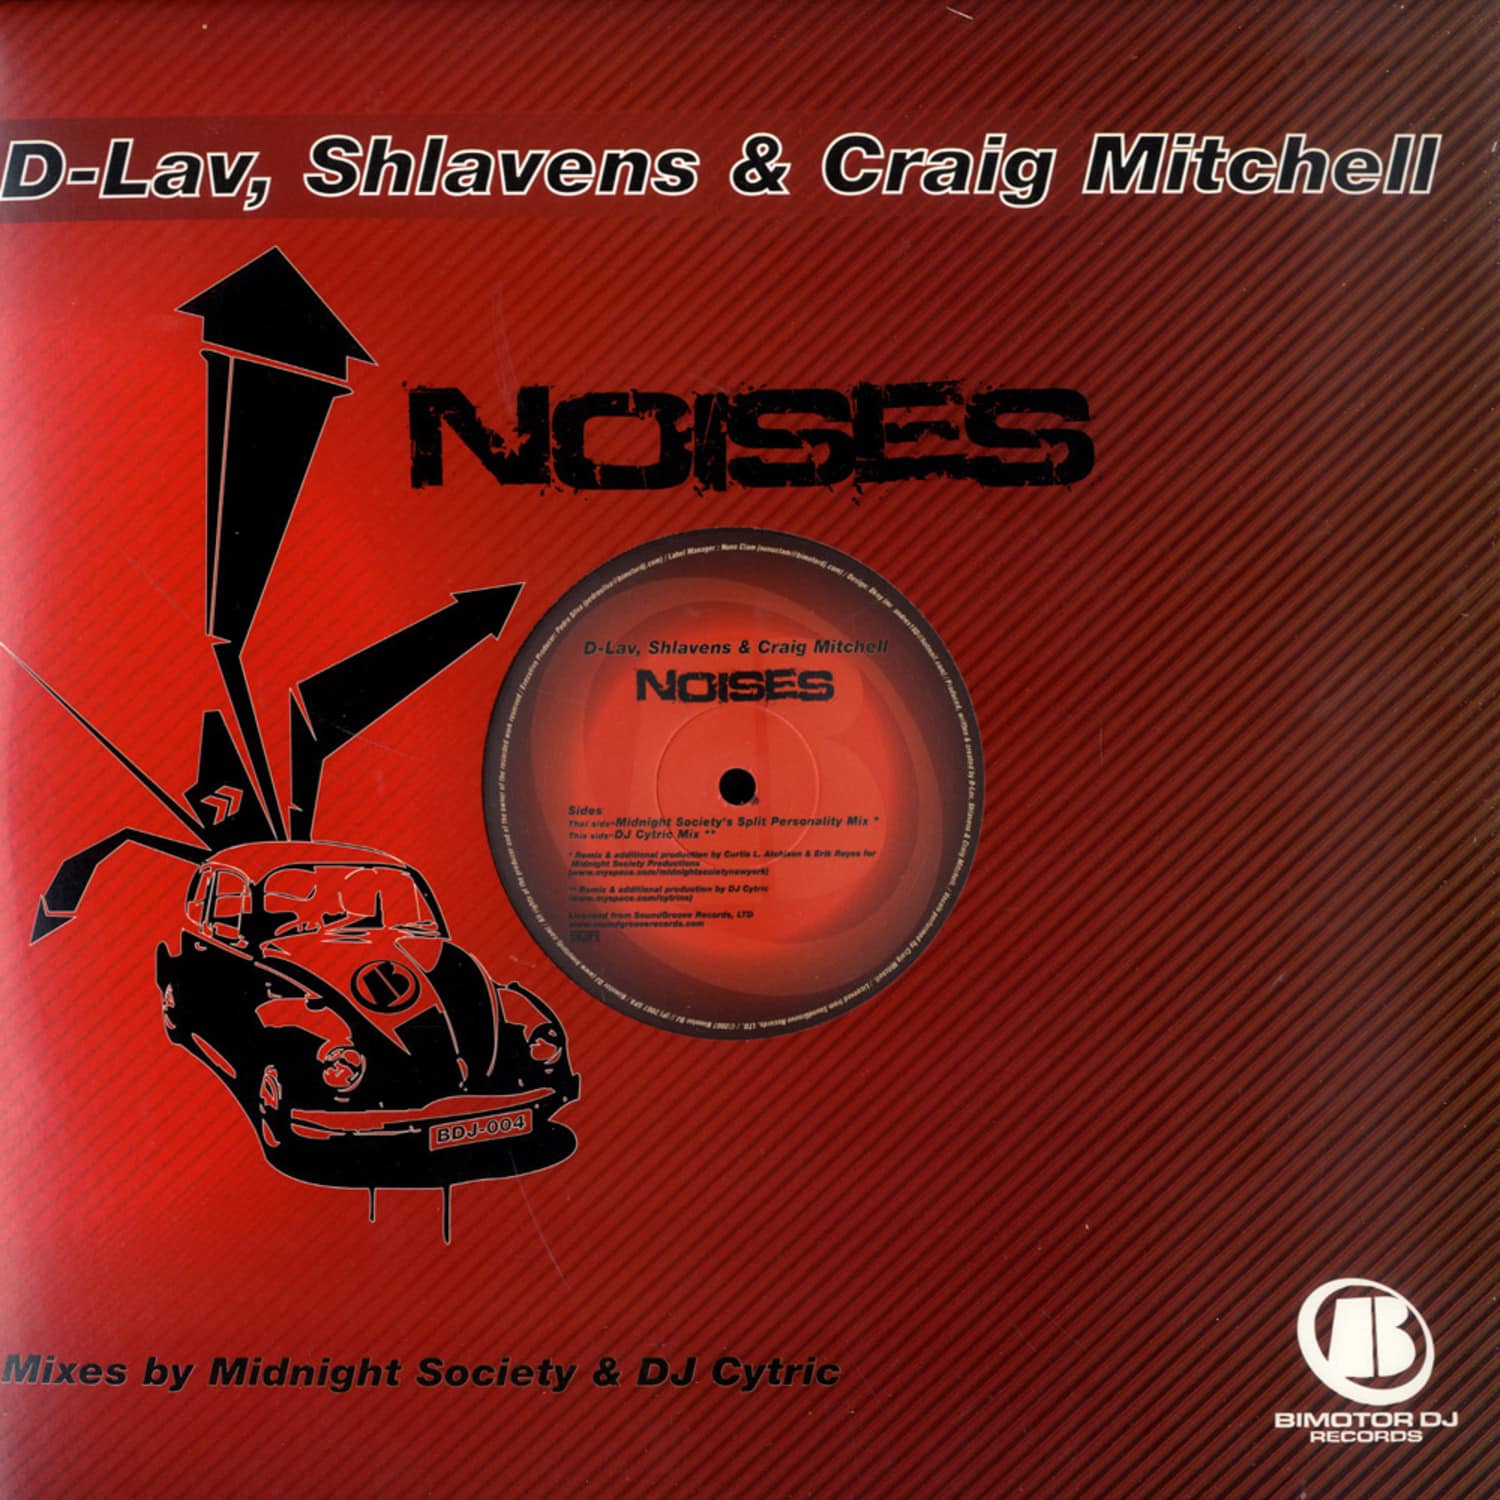 D-lav Shlavens & Craig Mitchell - NOISES